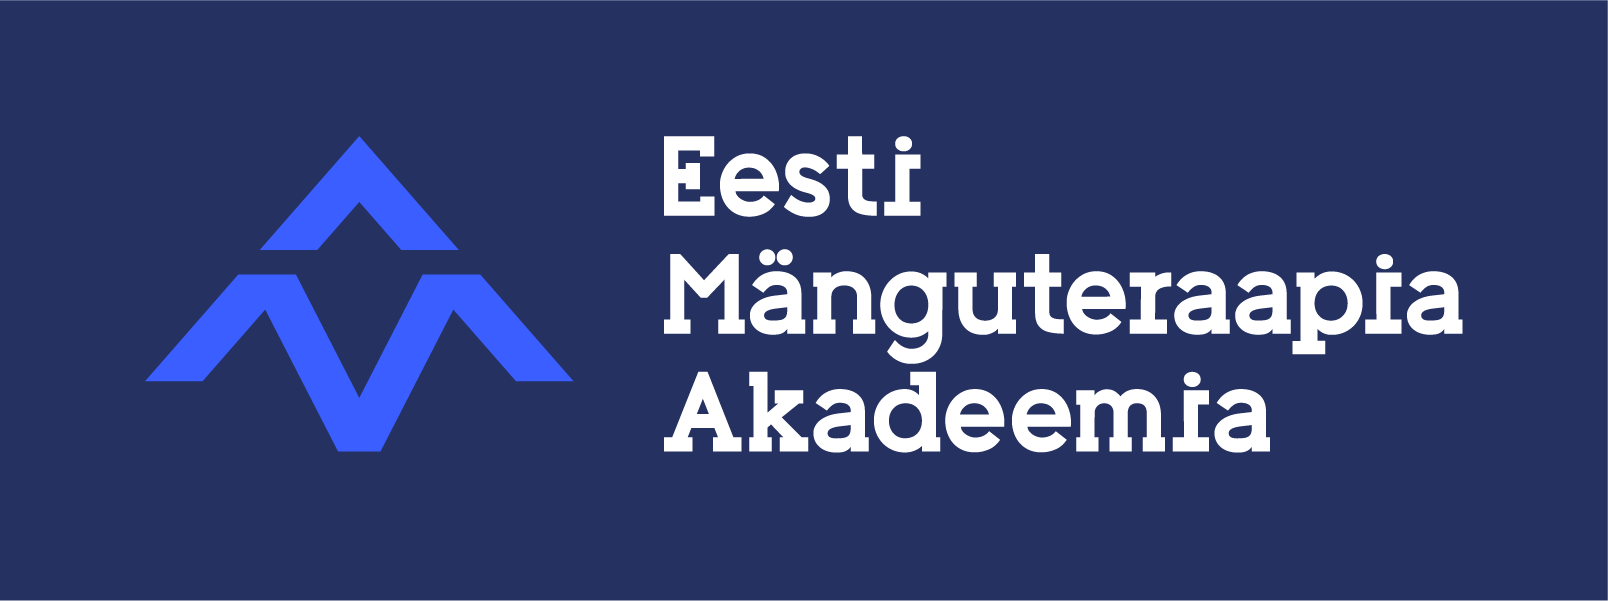 Eesti Mänguteraapia Akadeemia